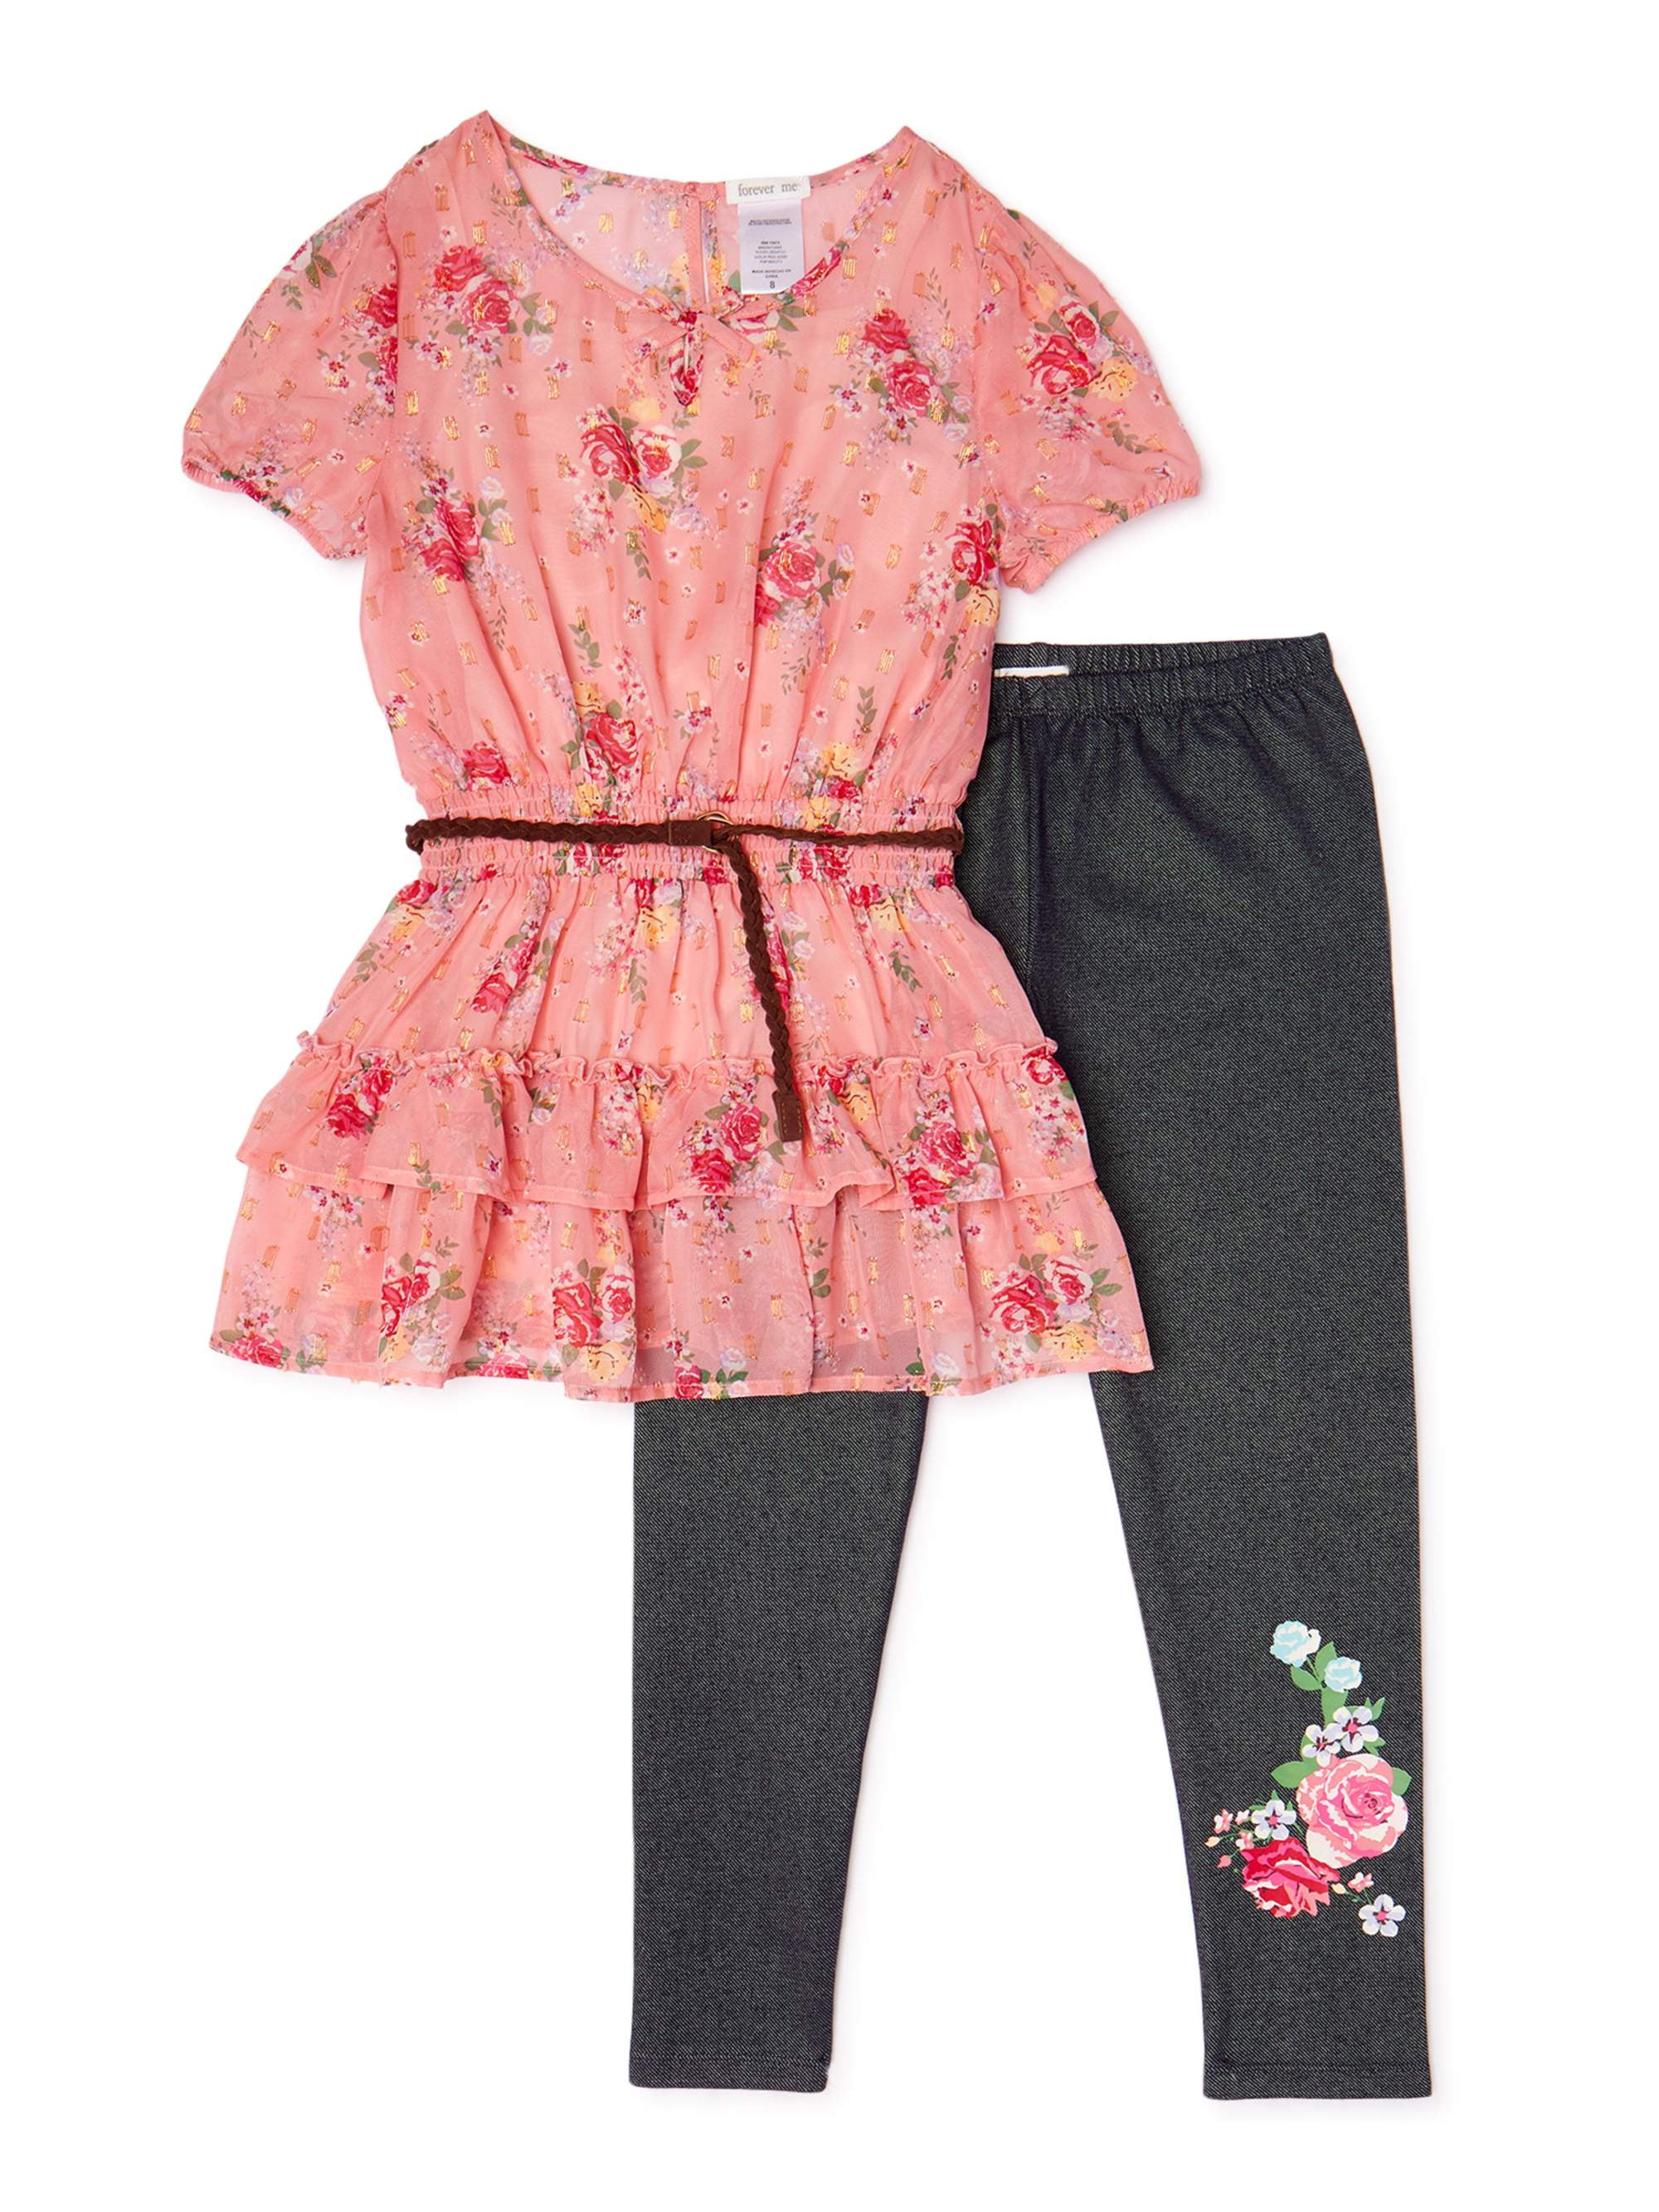 Sweatwater Womens Floral Print Tie Basic 2 Piece Chiffon Playsuit Jumpsuits